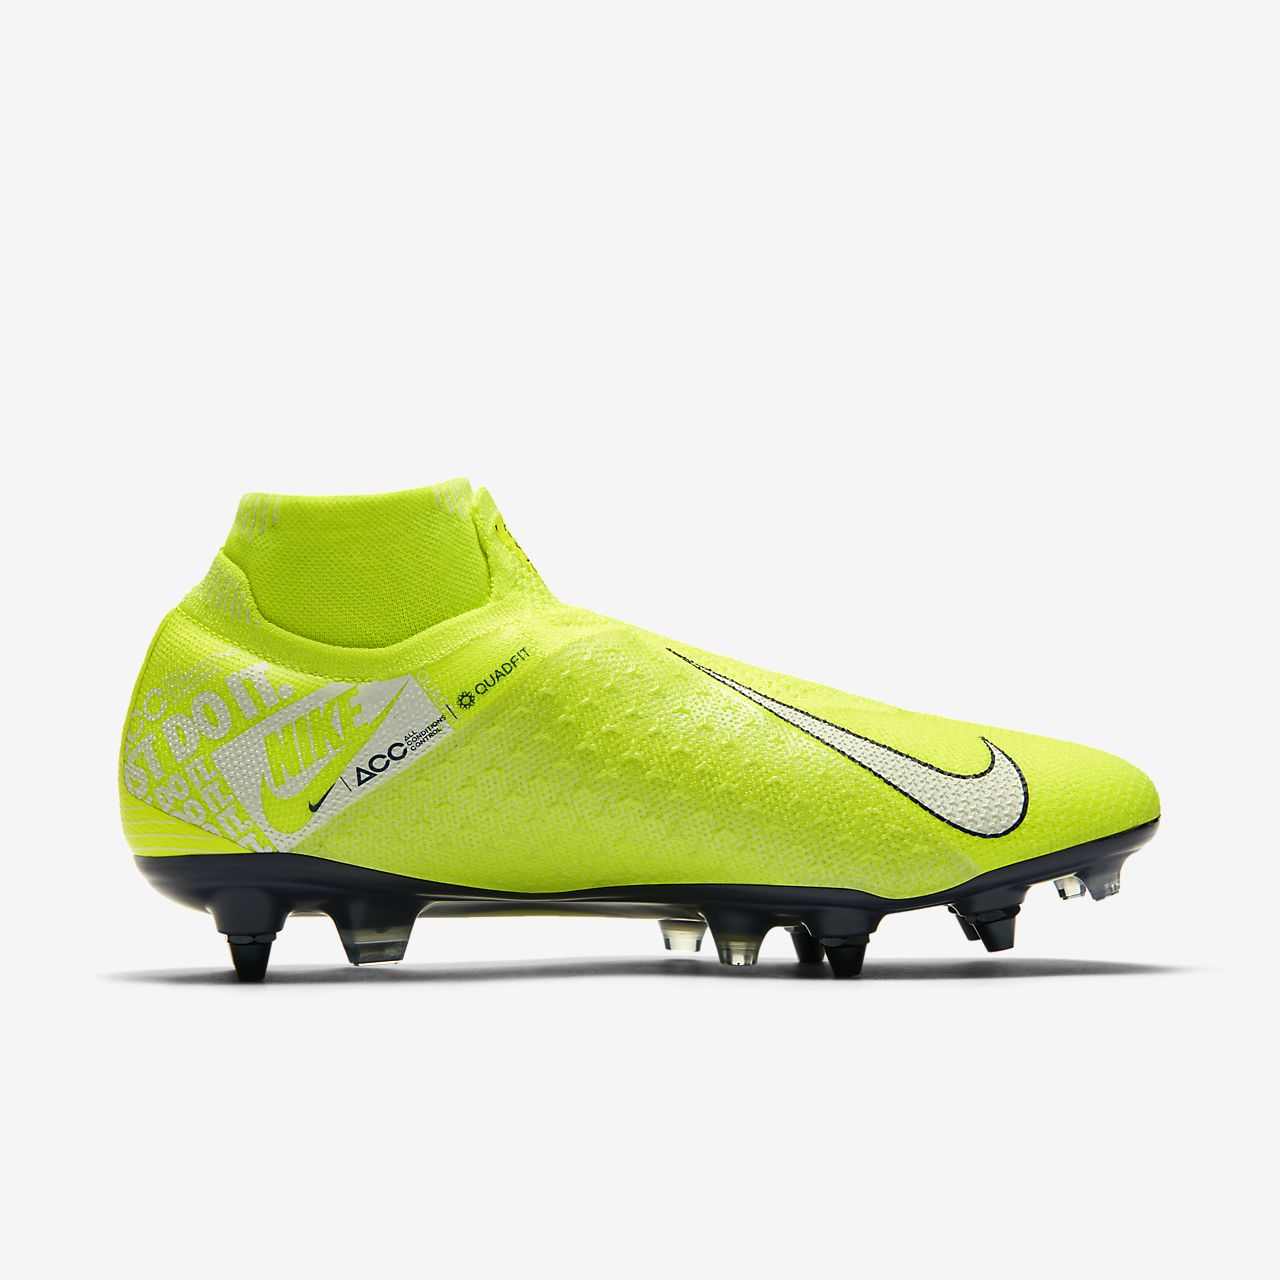 Phantom Vision Nike Soccer Cleats Best Price Guarantee at .